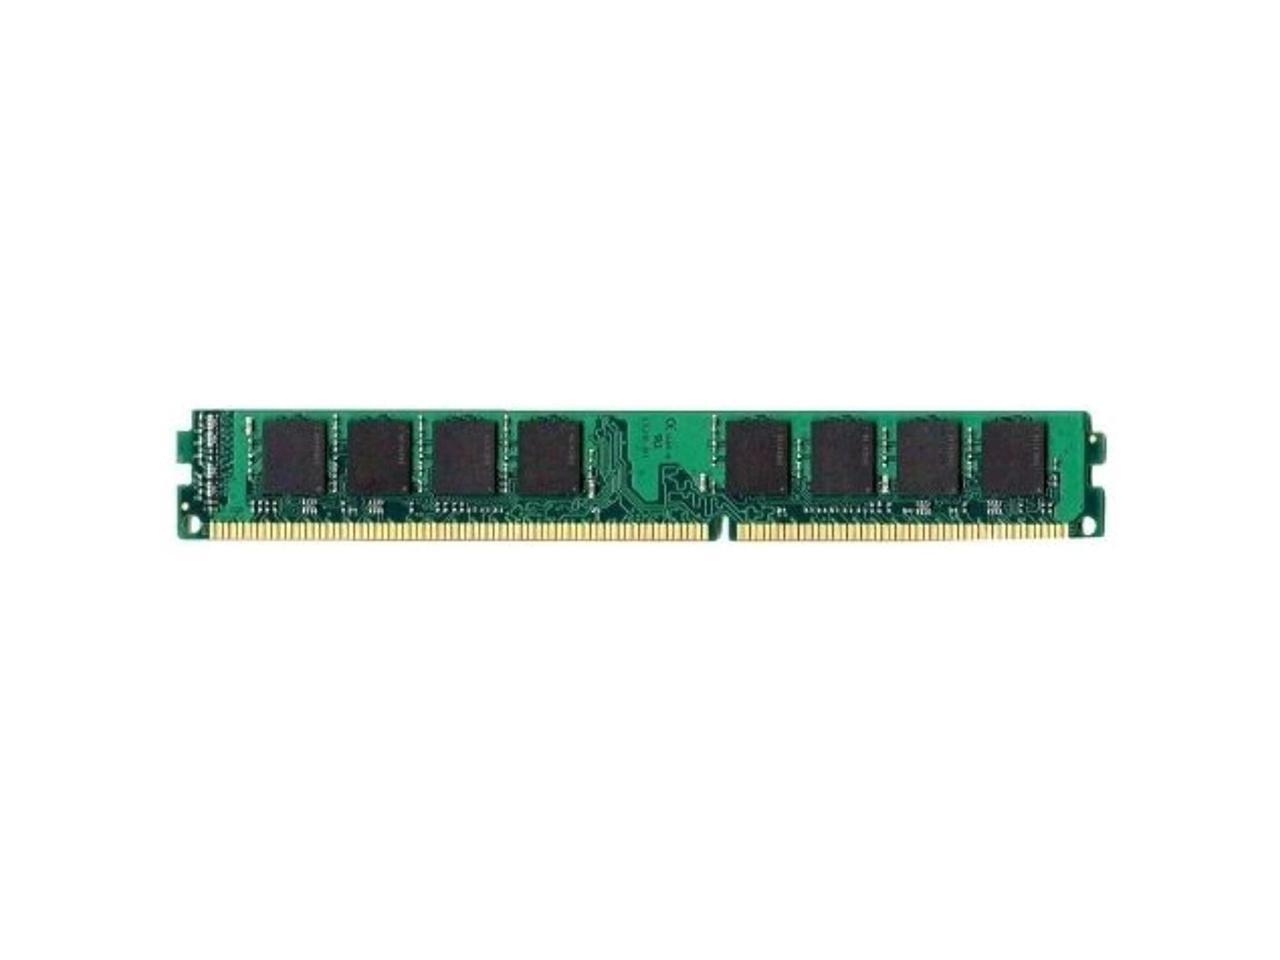 8GB DDR3 PC3-8500 1066 MHz LOW DENSITY Desktop Memory 2x 4GB for Intel & AMD RAM 